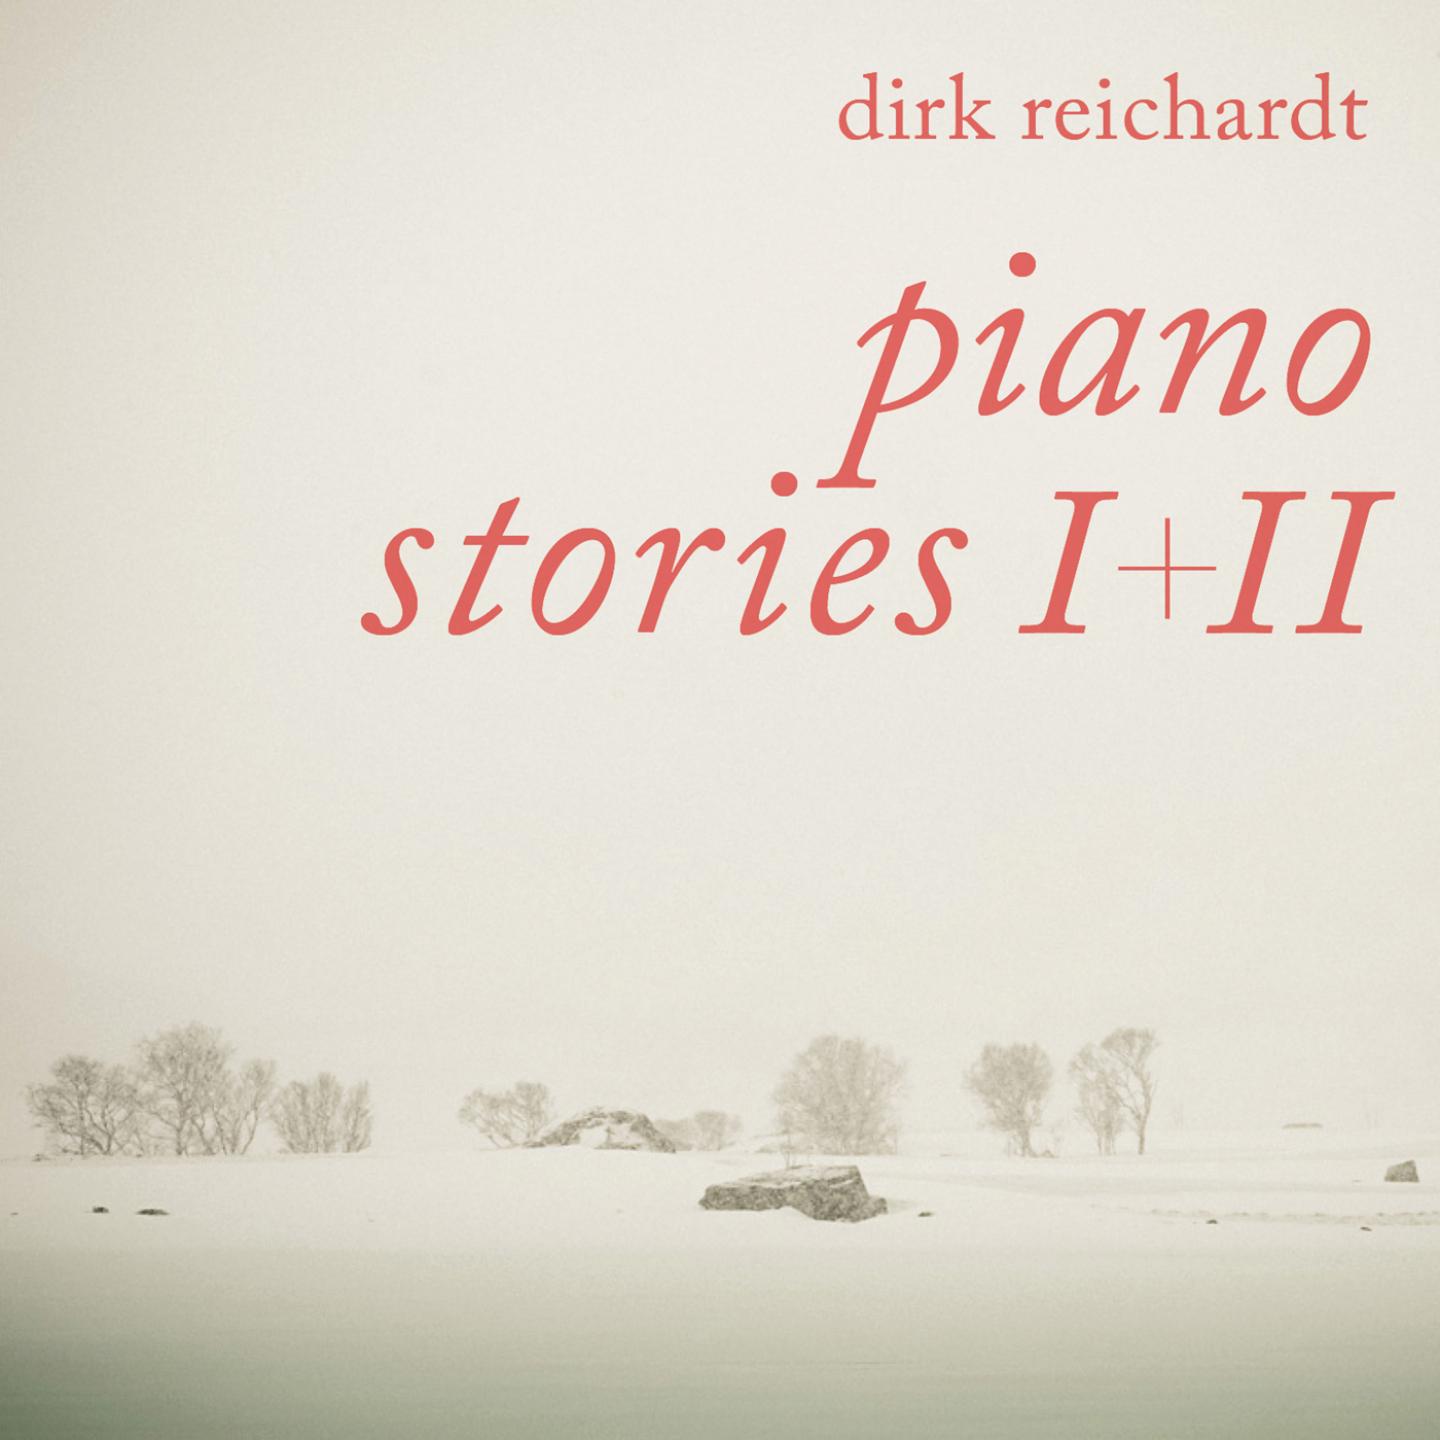 Piano Stories I & II专辑